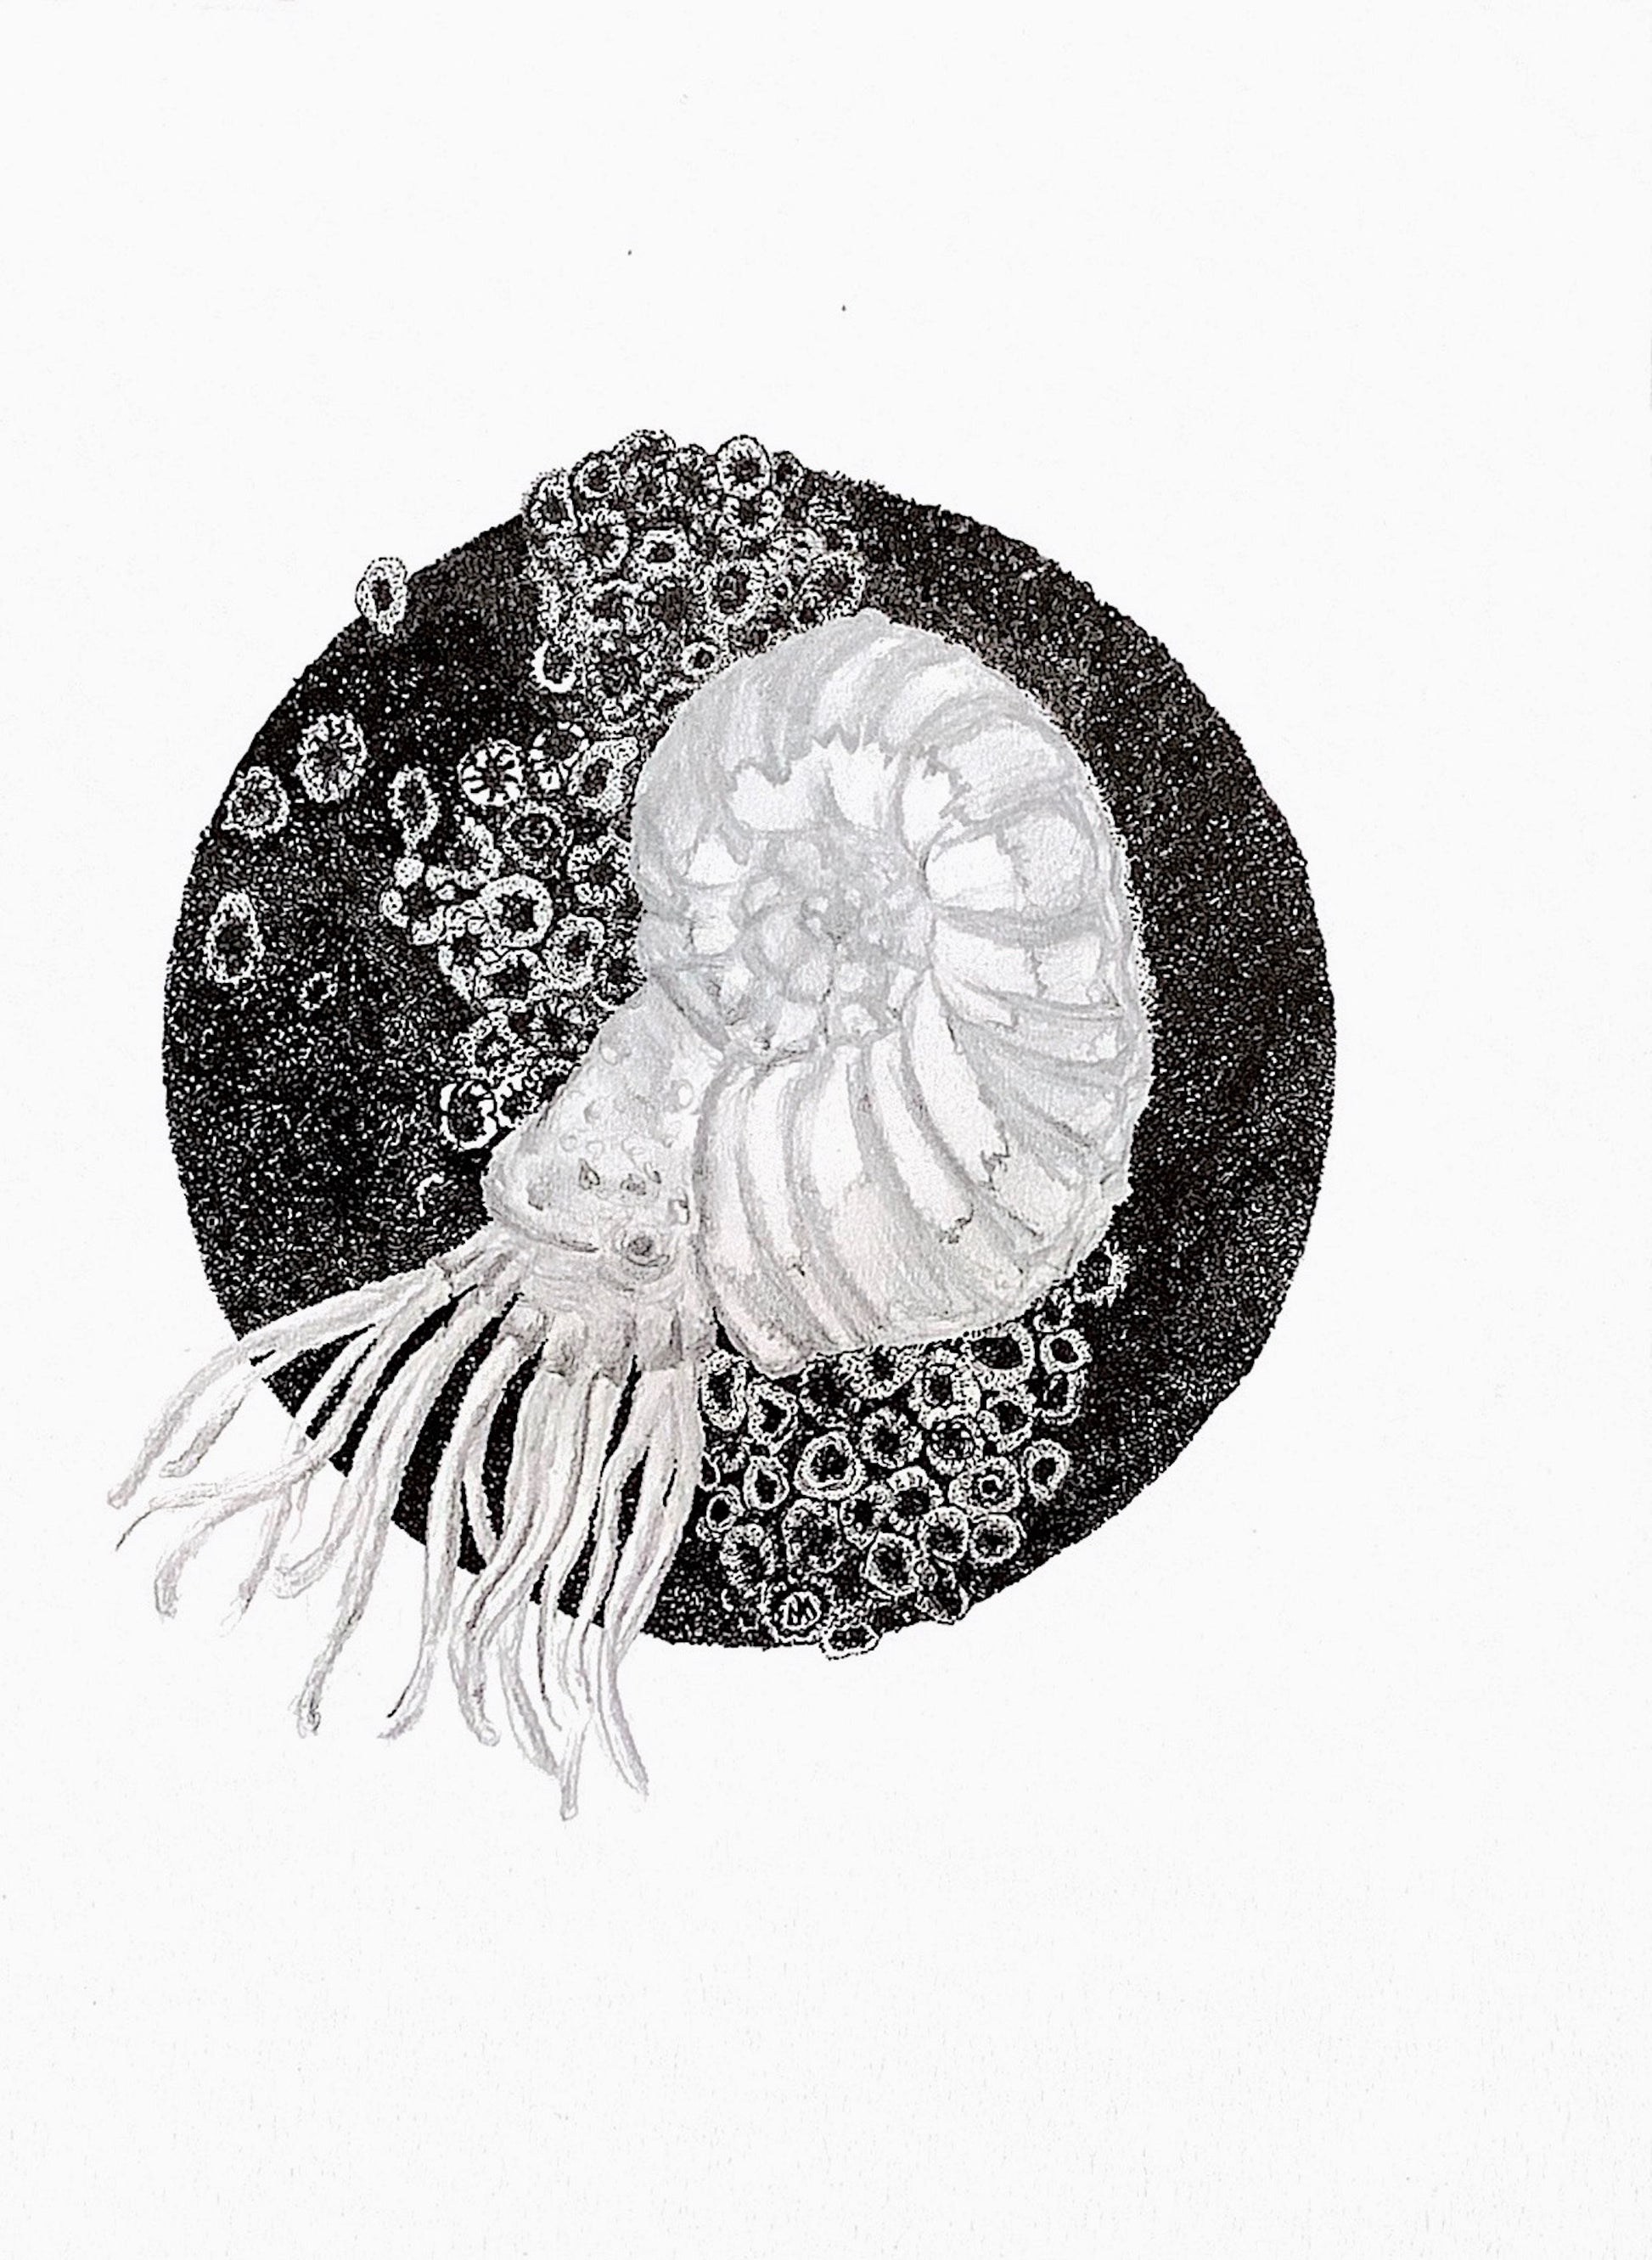 Ammonite, 4 x 6 postcard